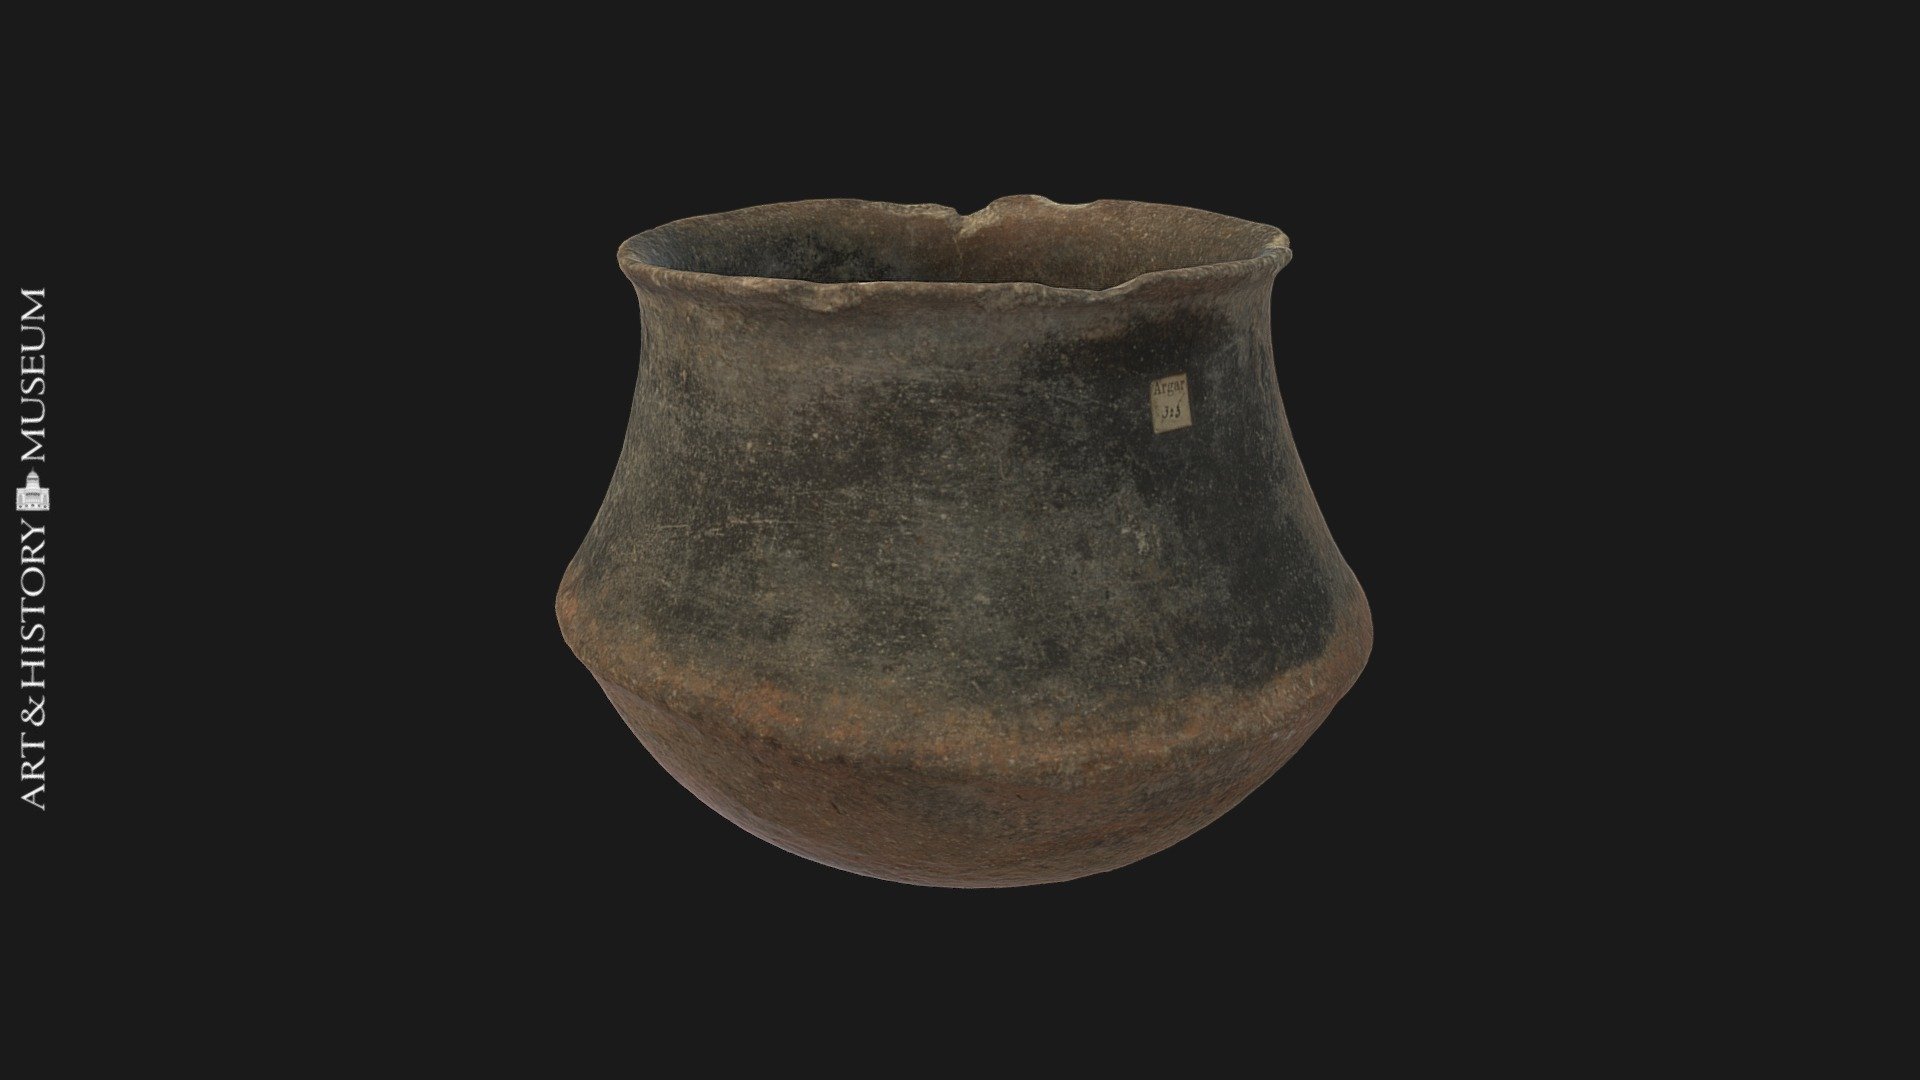 Carinated vase with flaring rim - PG.41.1.176